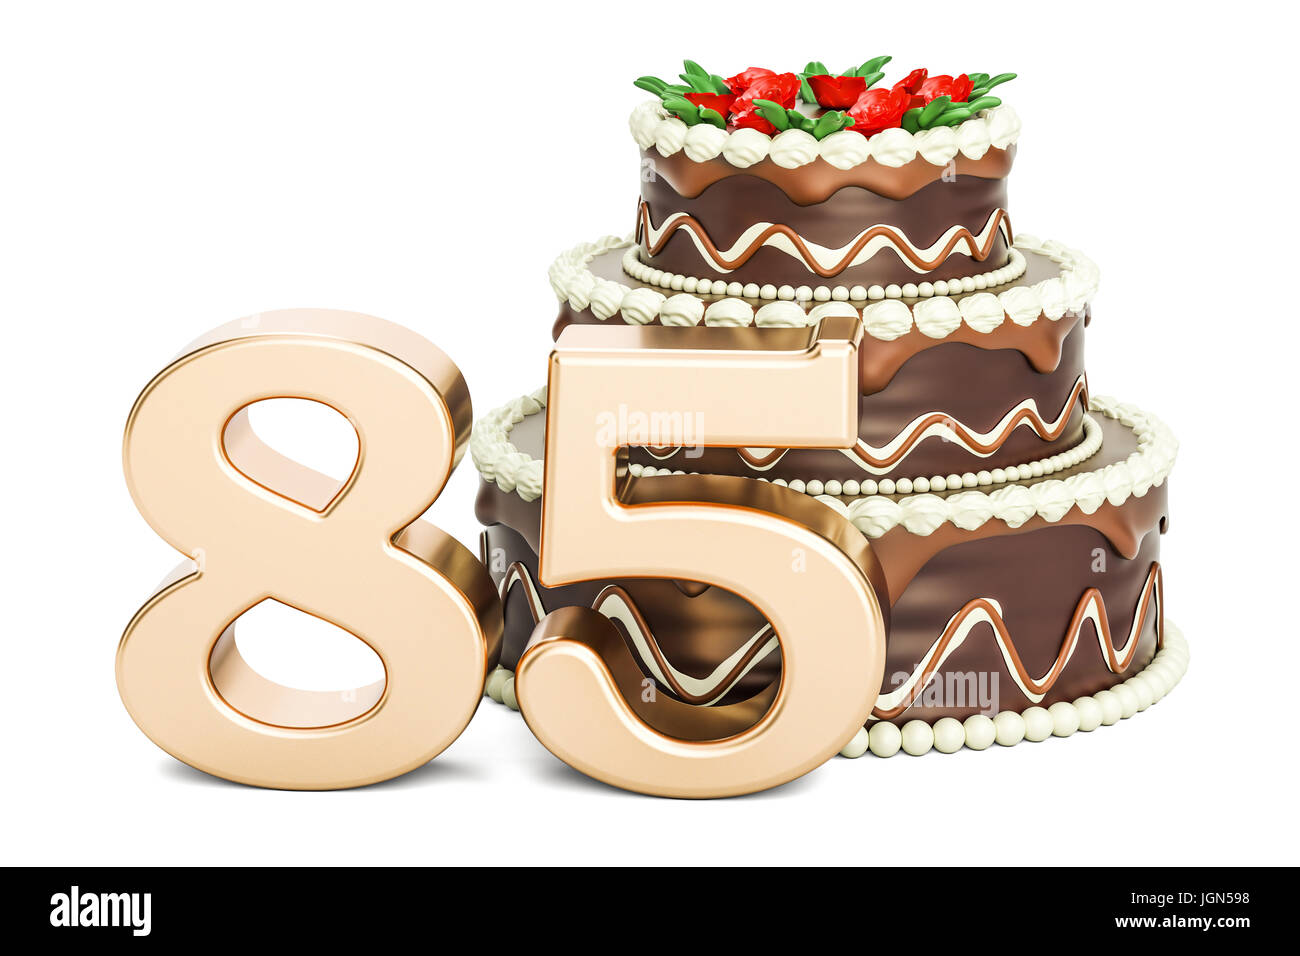 Happy Birthday Cake PNG Image - Birthday Cake Party Illustration